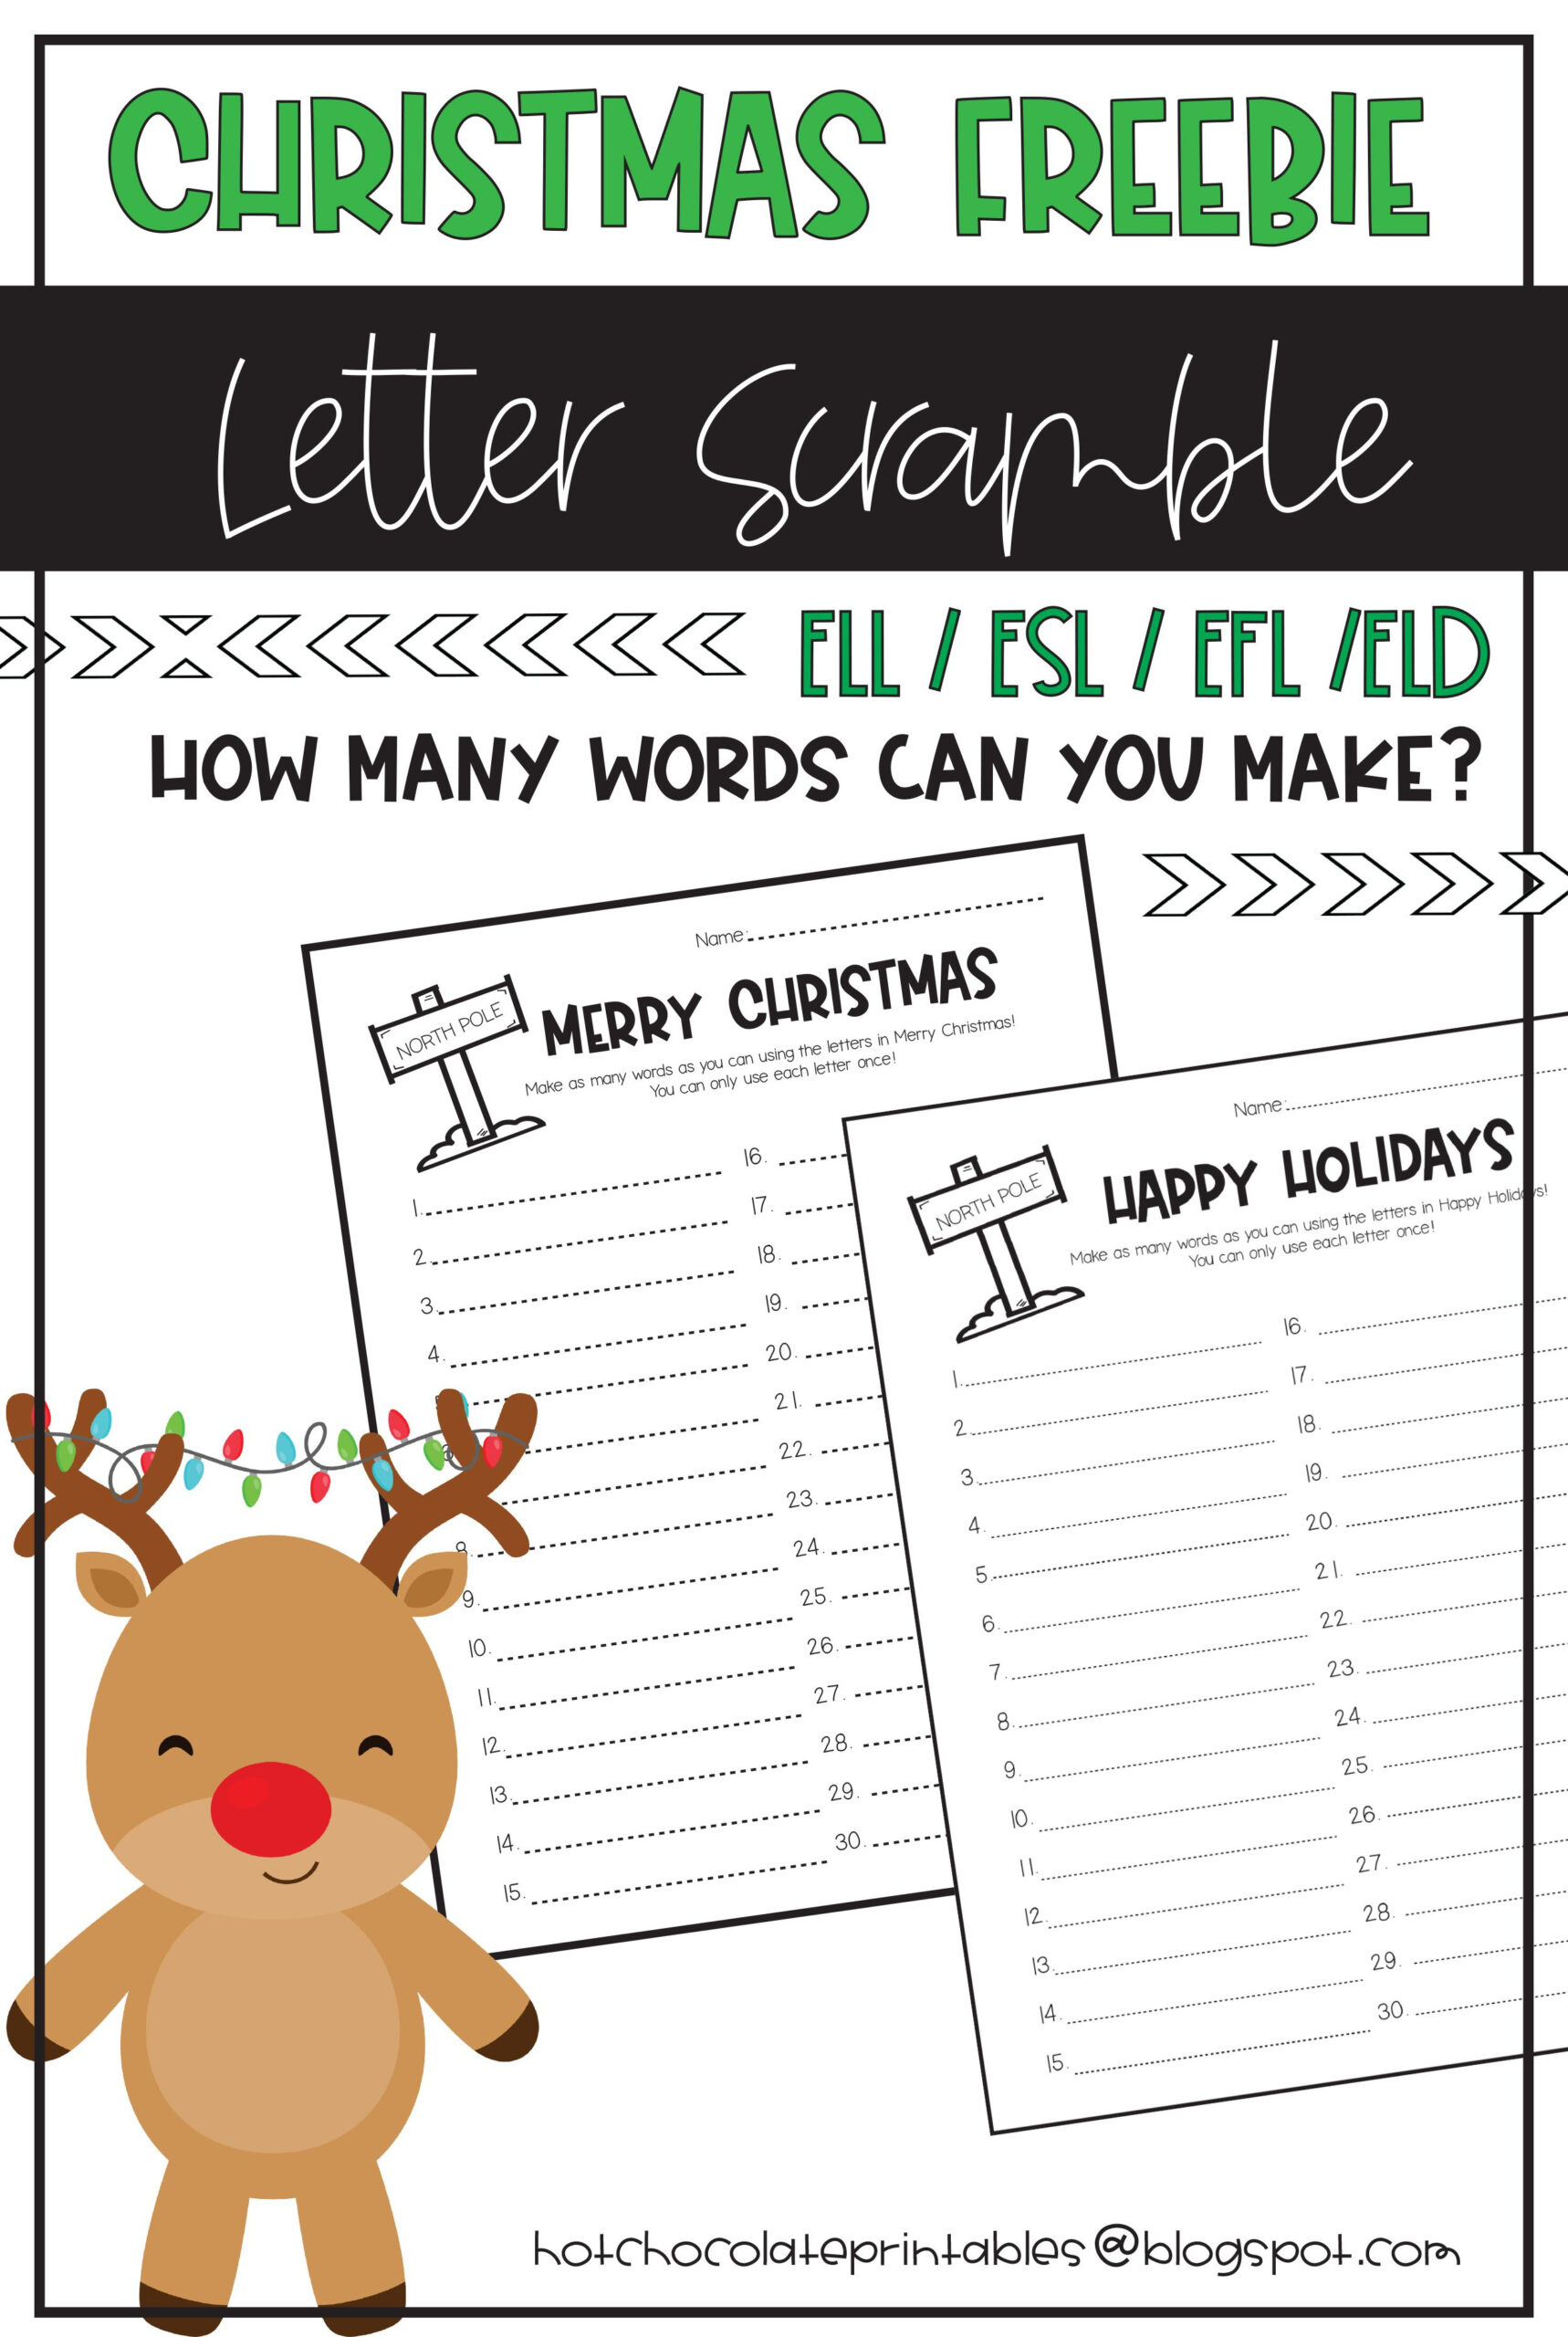 Christmas Word Scramble Freebie! How Many Words Can You Make